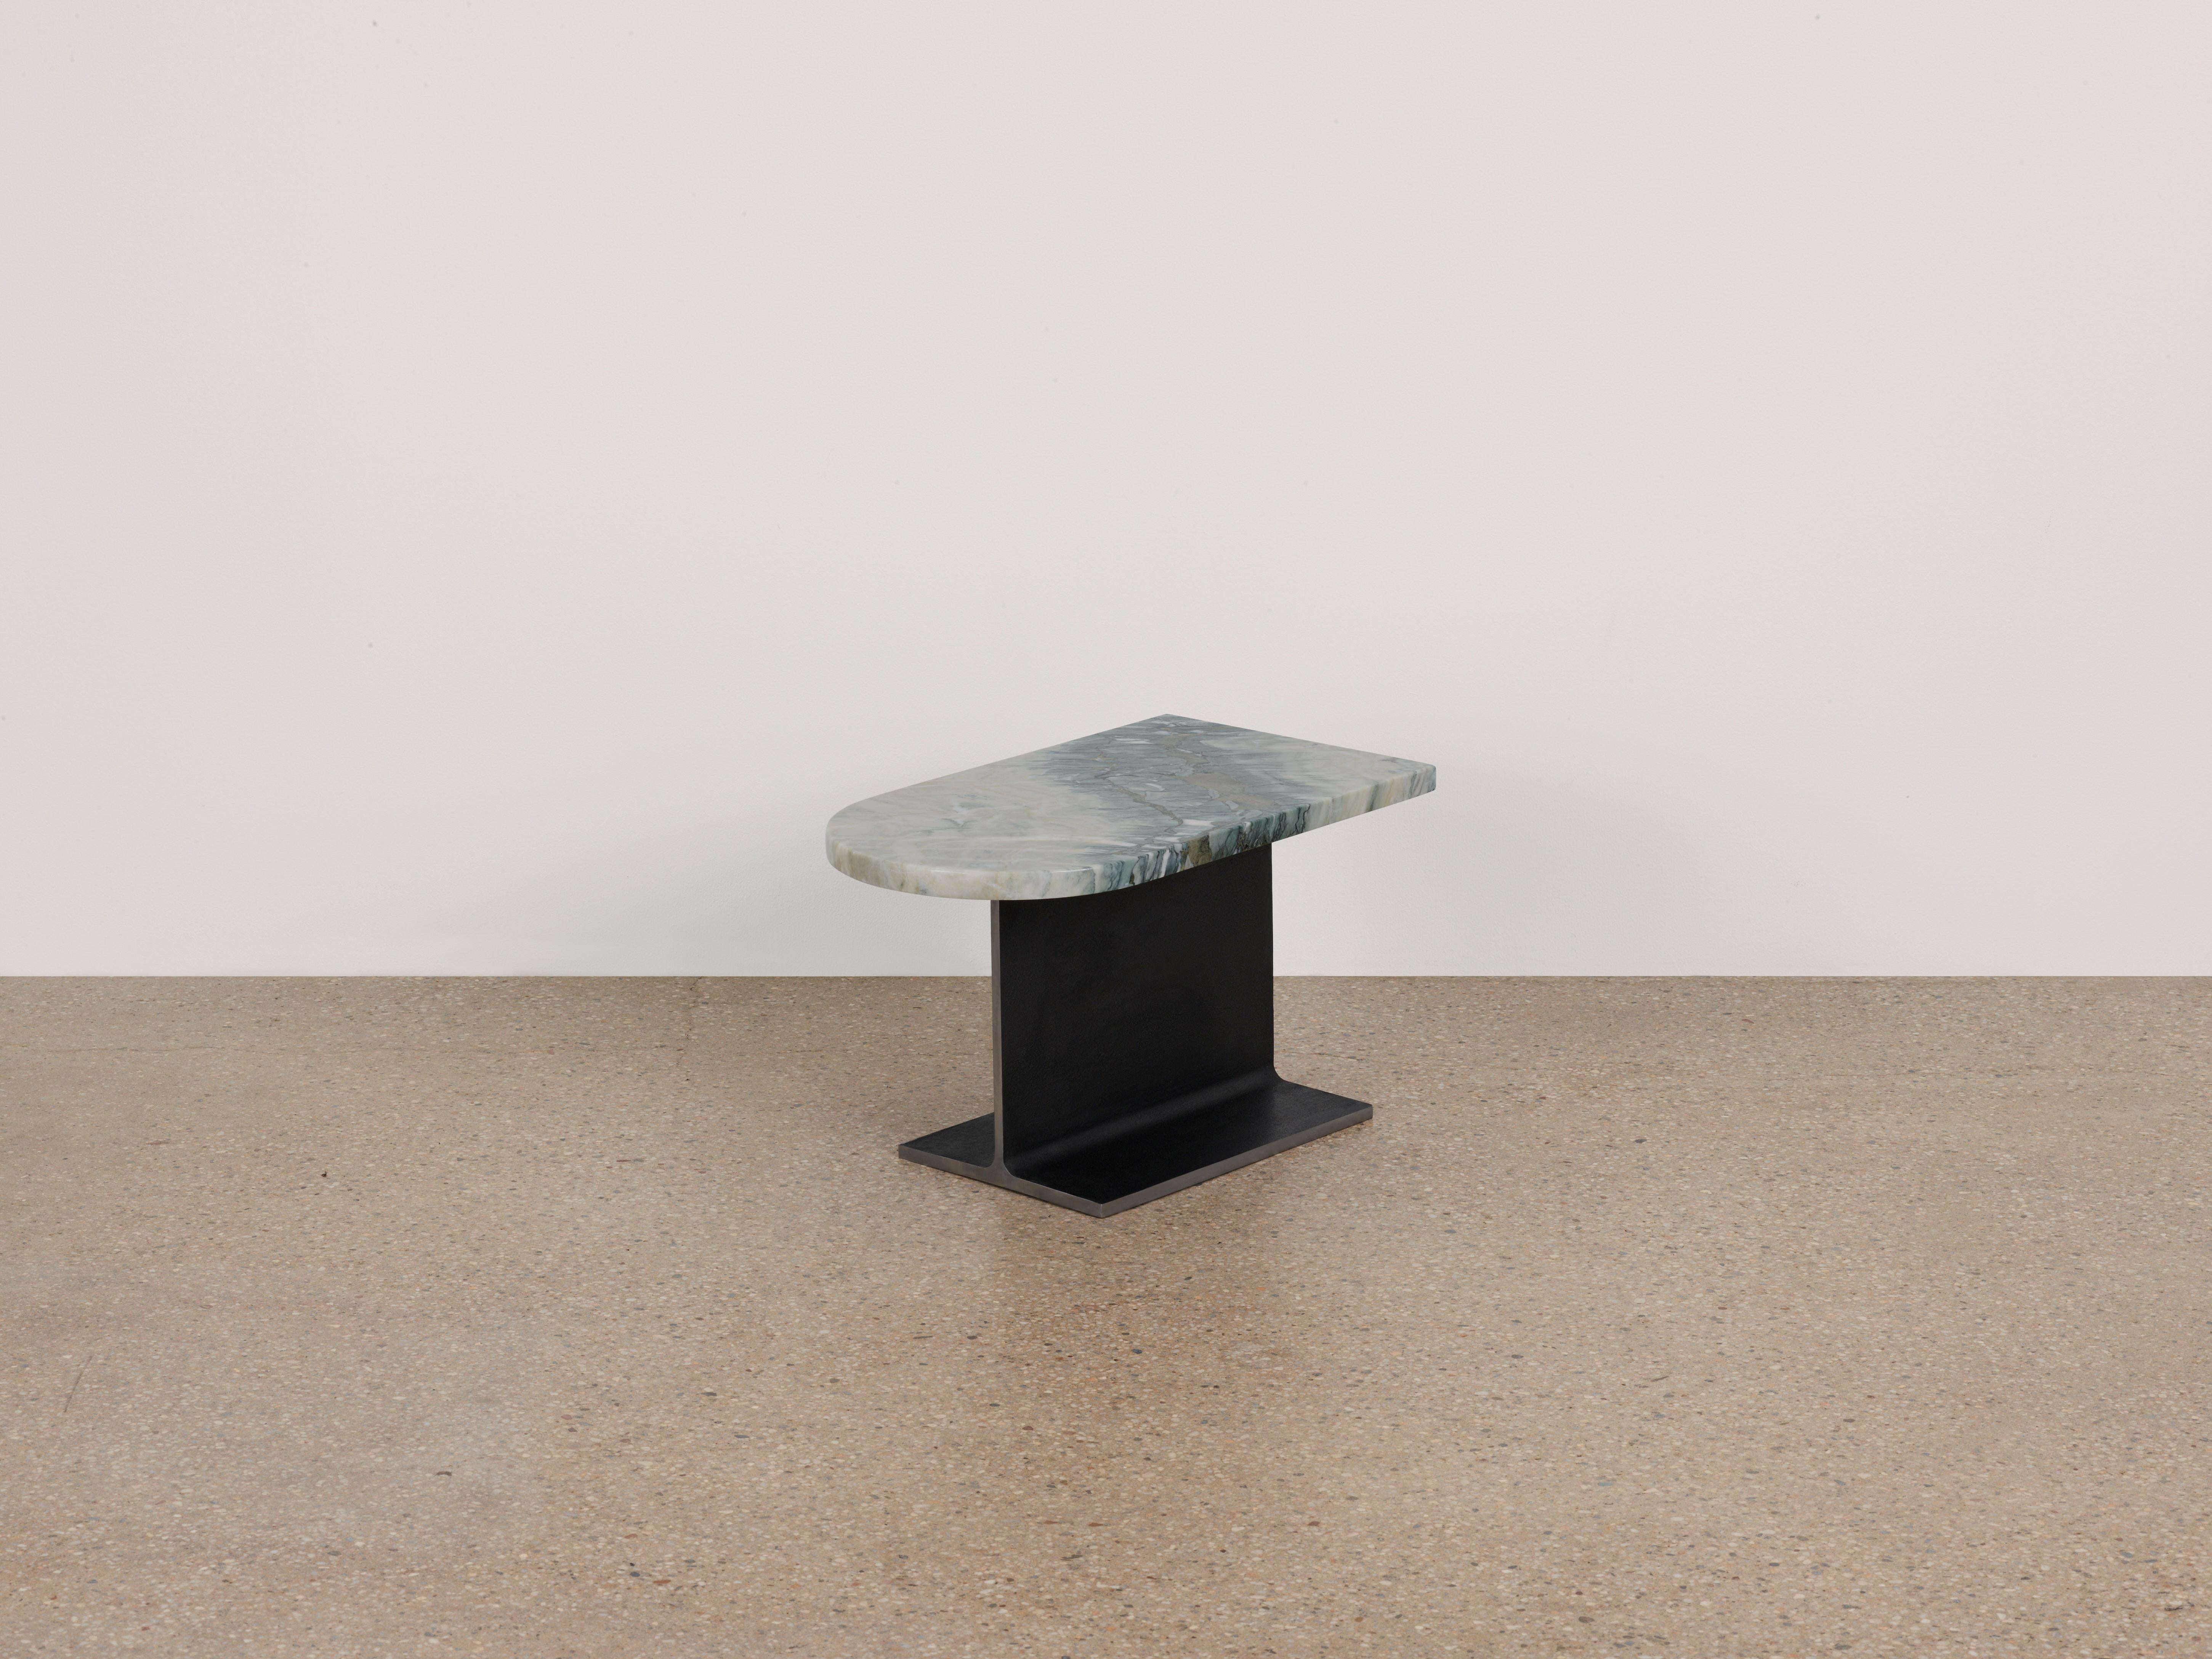 Riso side table by Umberto Bellardi Ricci
Dimensions: D 10